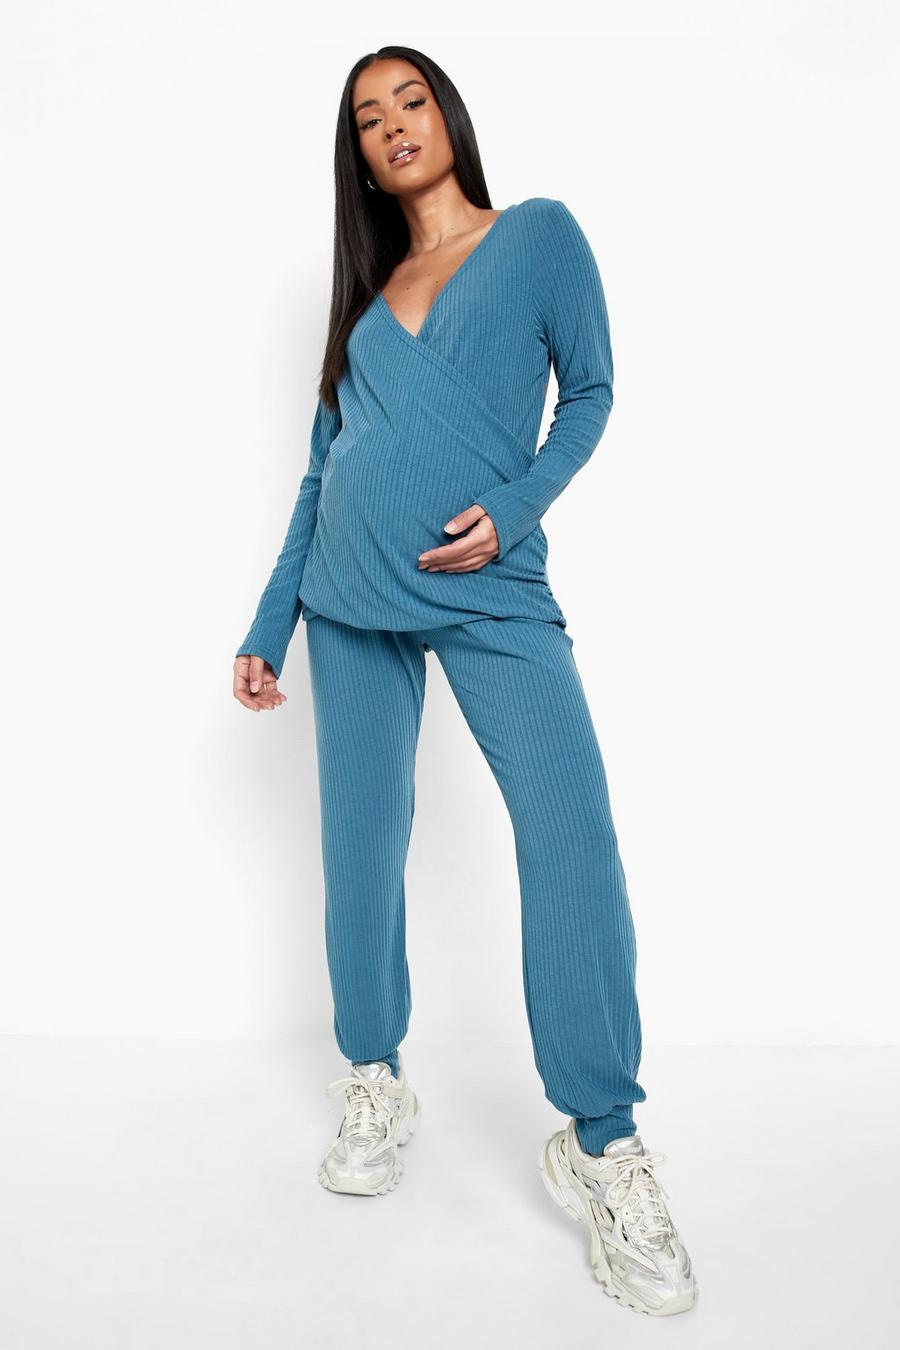 Blue Maternity Nursing Wrap Top Loungewear Set